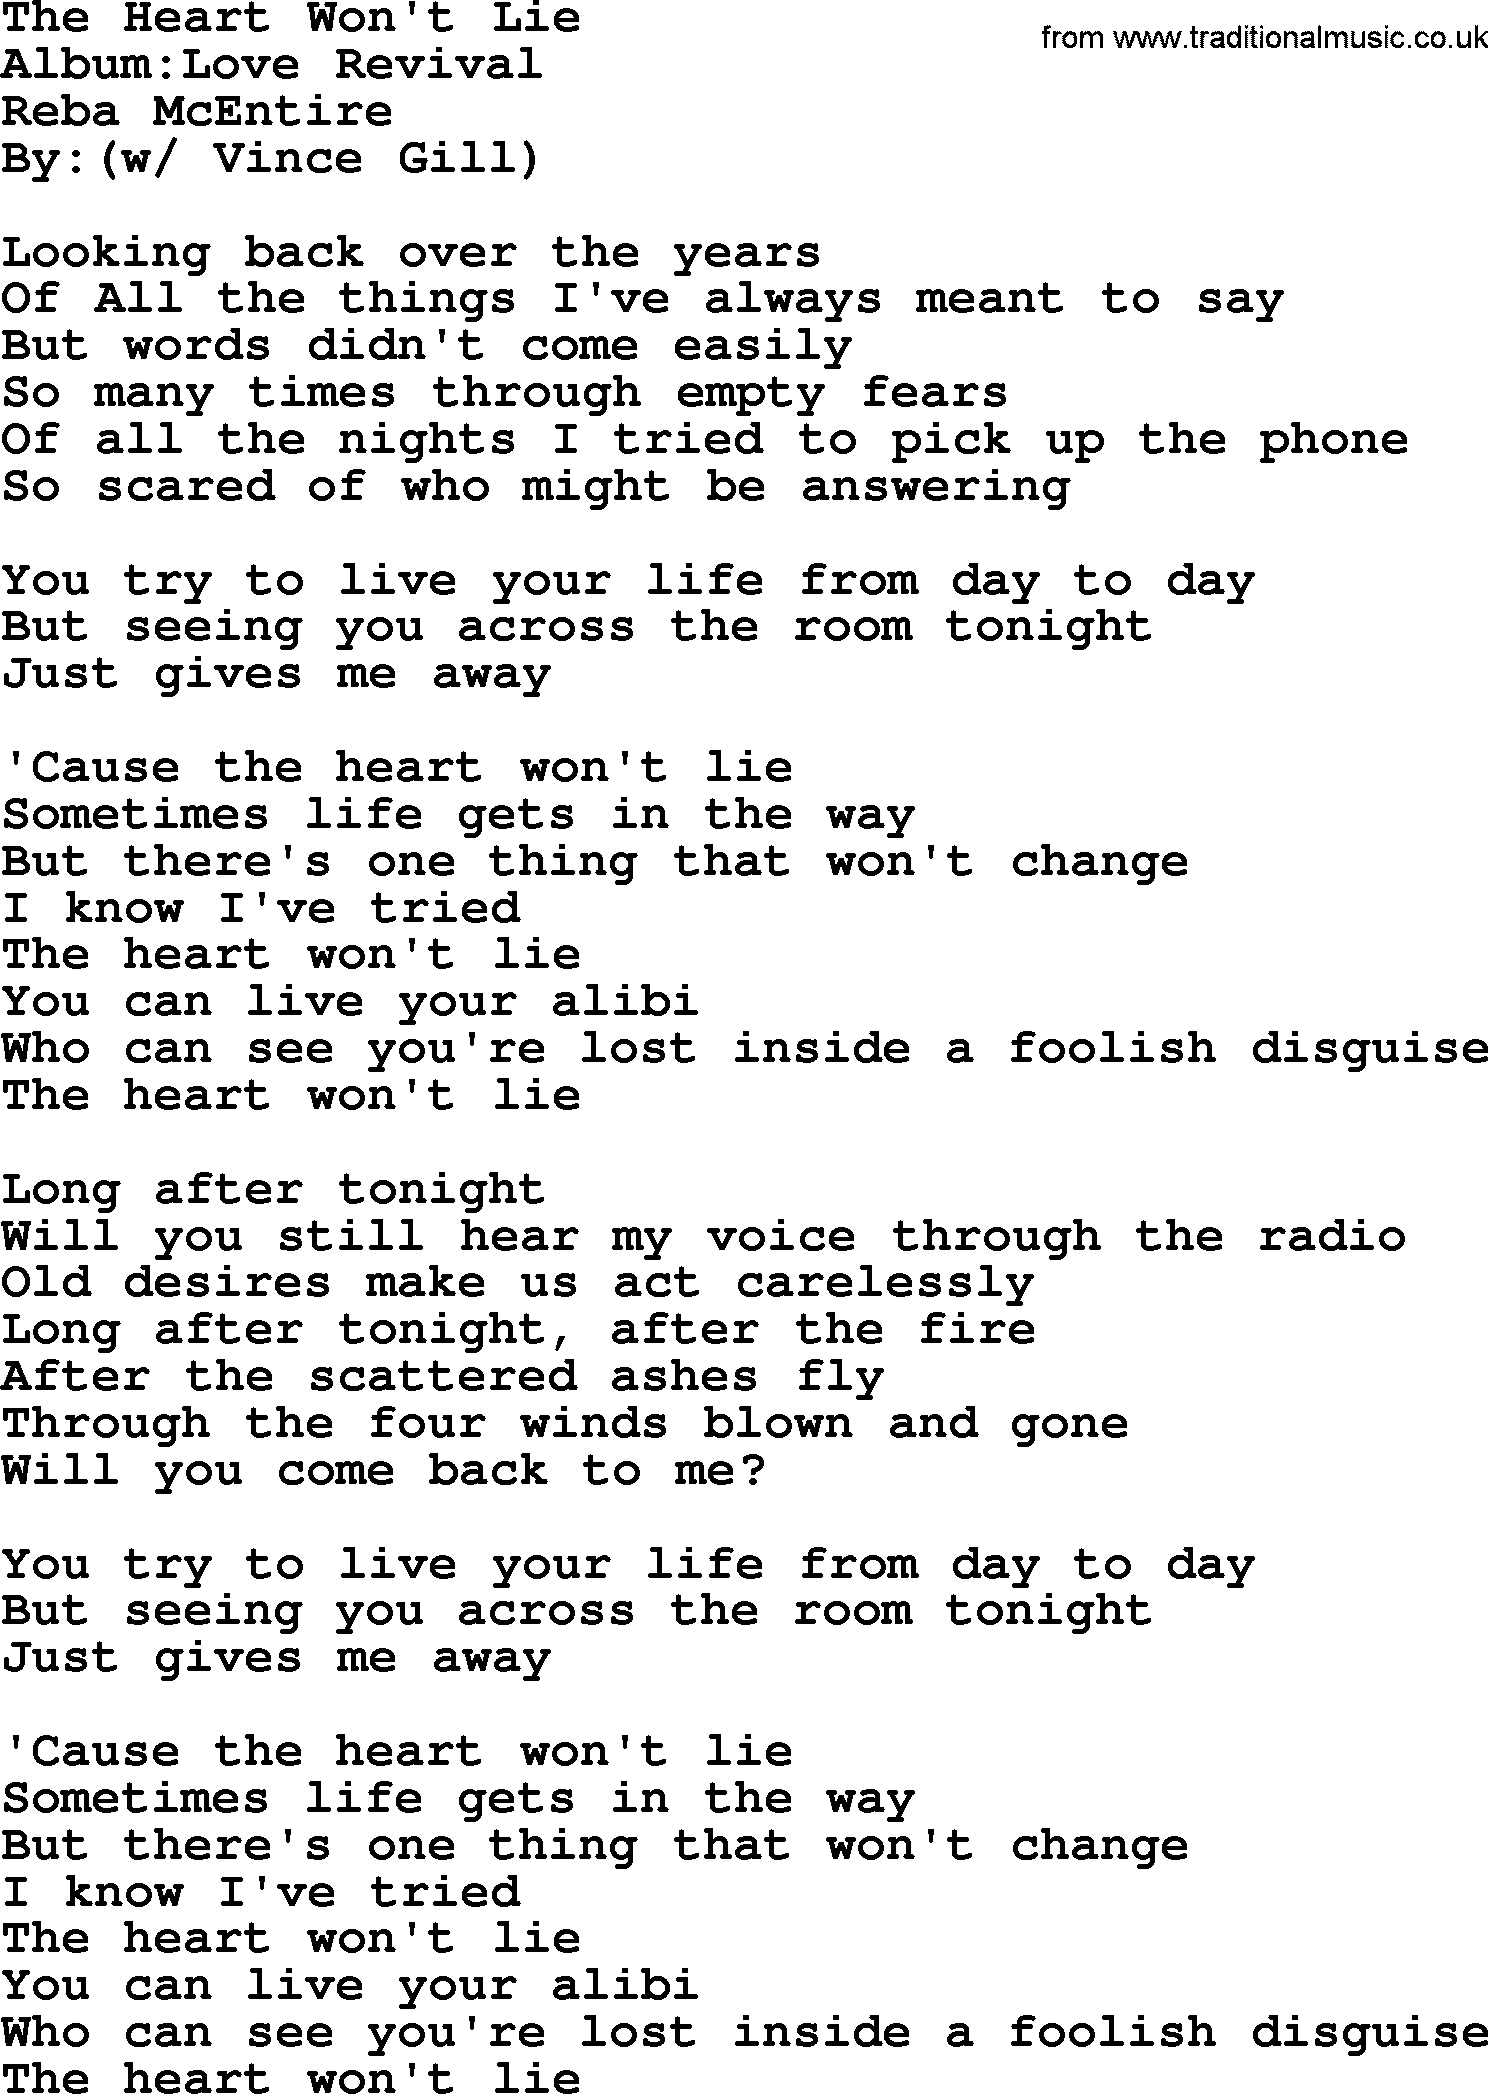 Reba McEntire song: The Heart Won't Lie lyrics